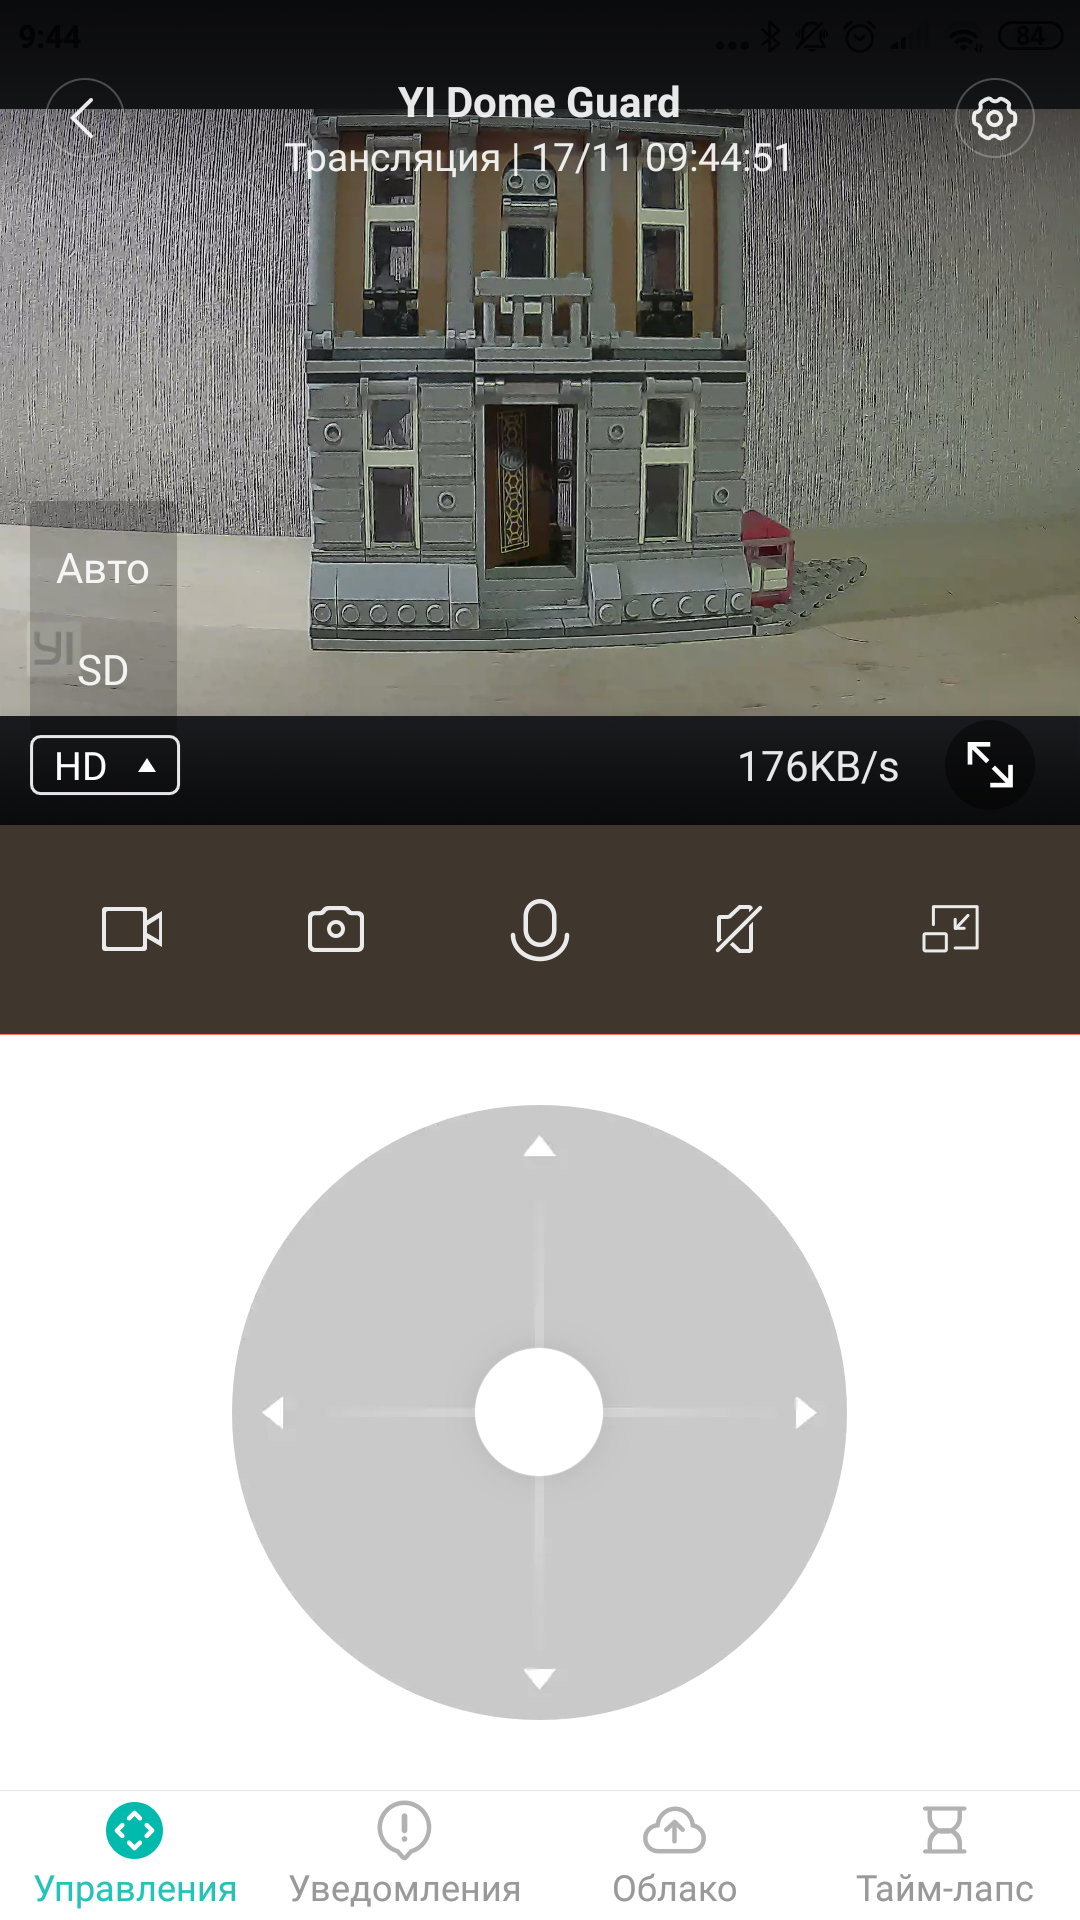 Обзор YI Dome Guard: купольная IP-камера за $25-35